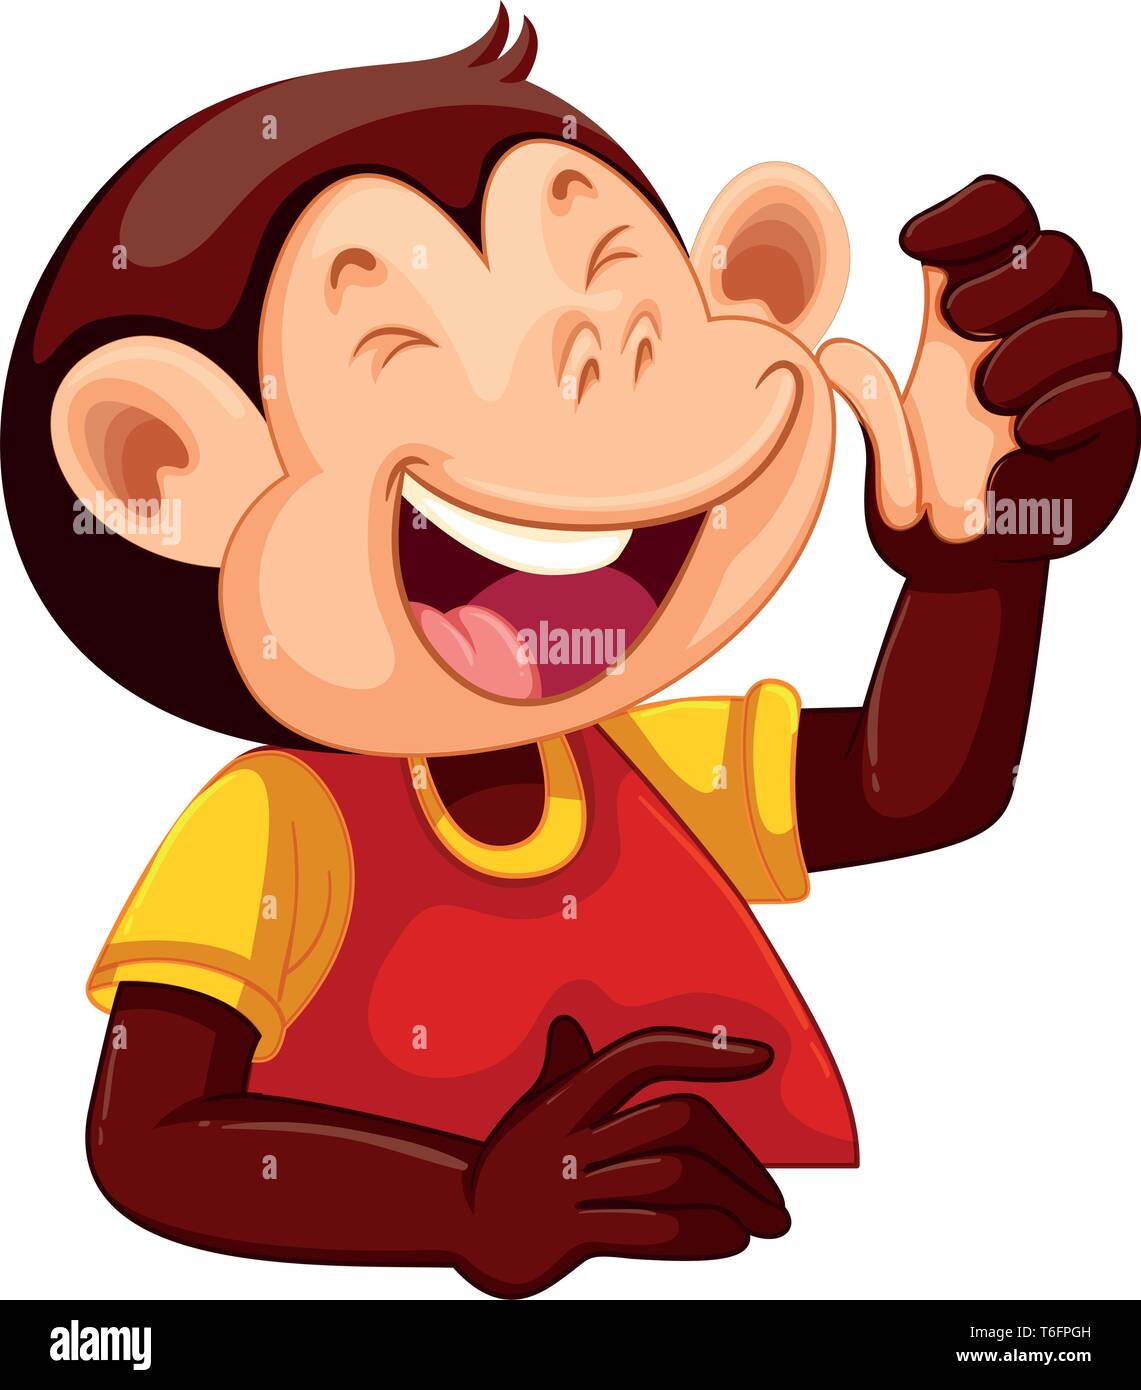 A happy monkey character illustration Stock Vector